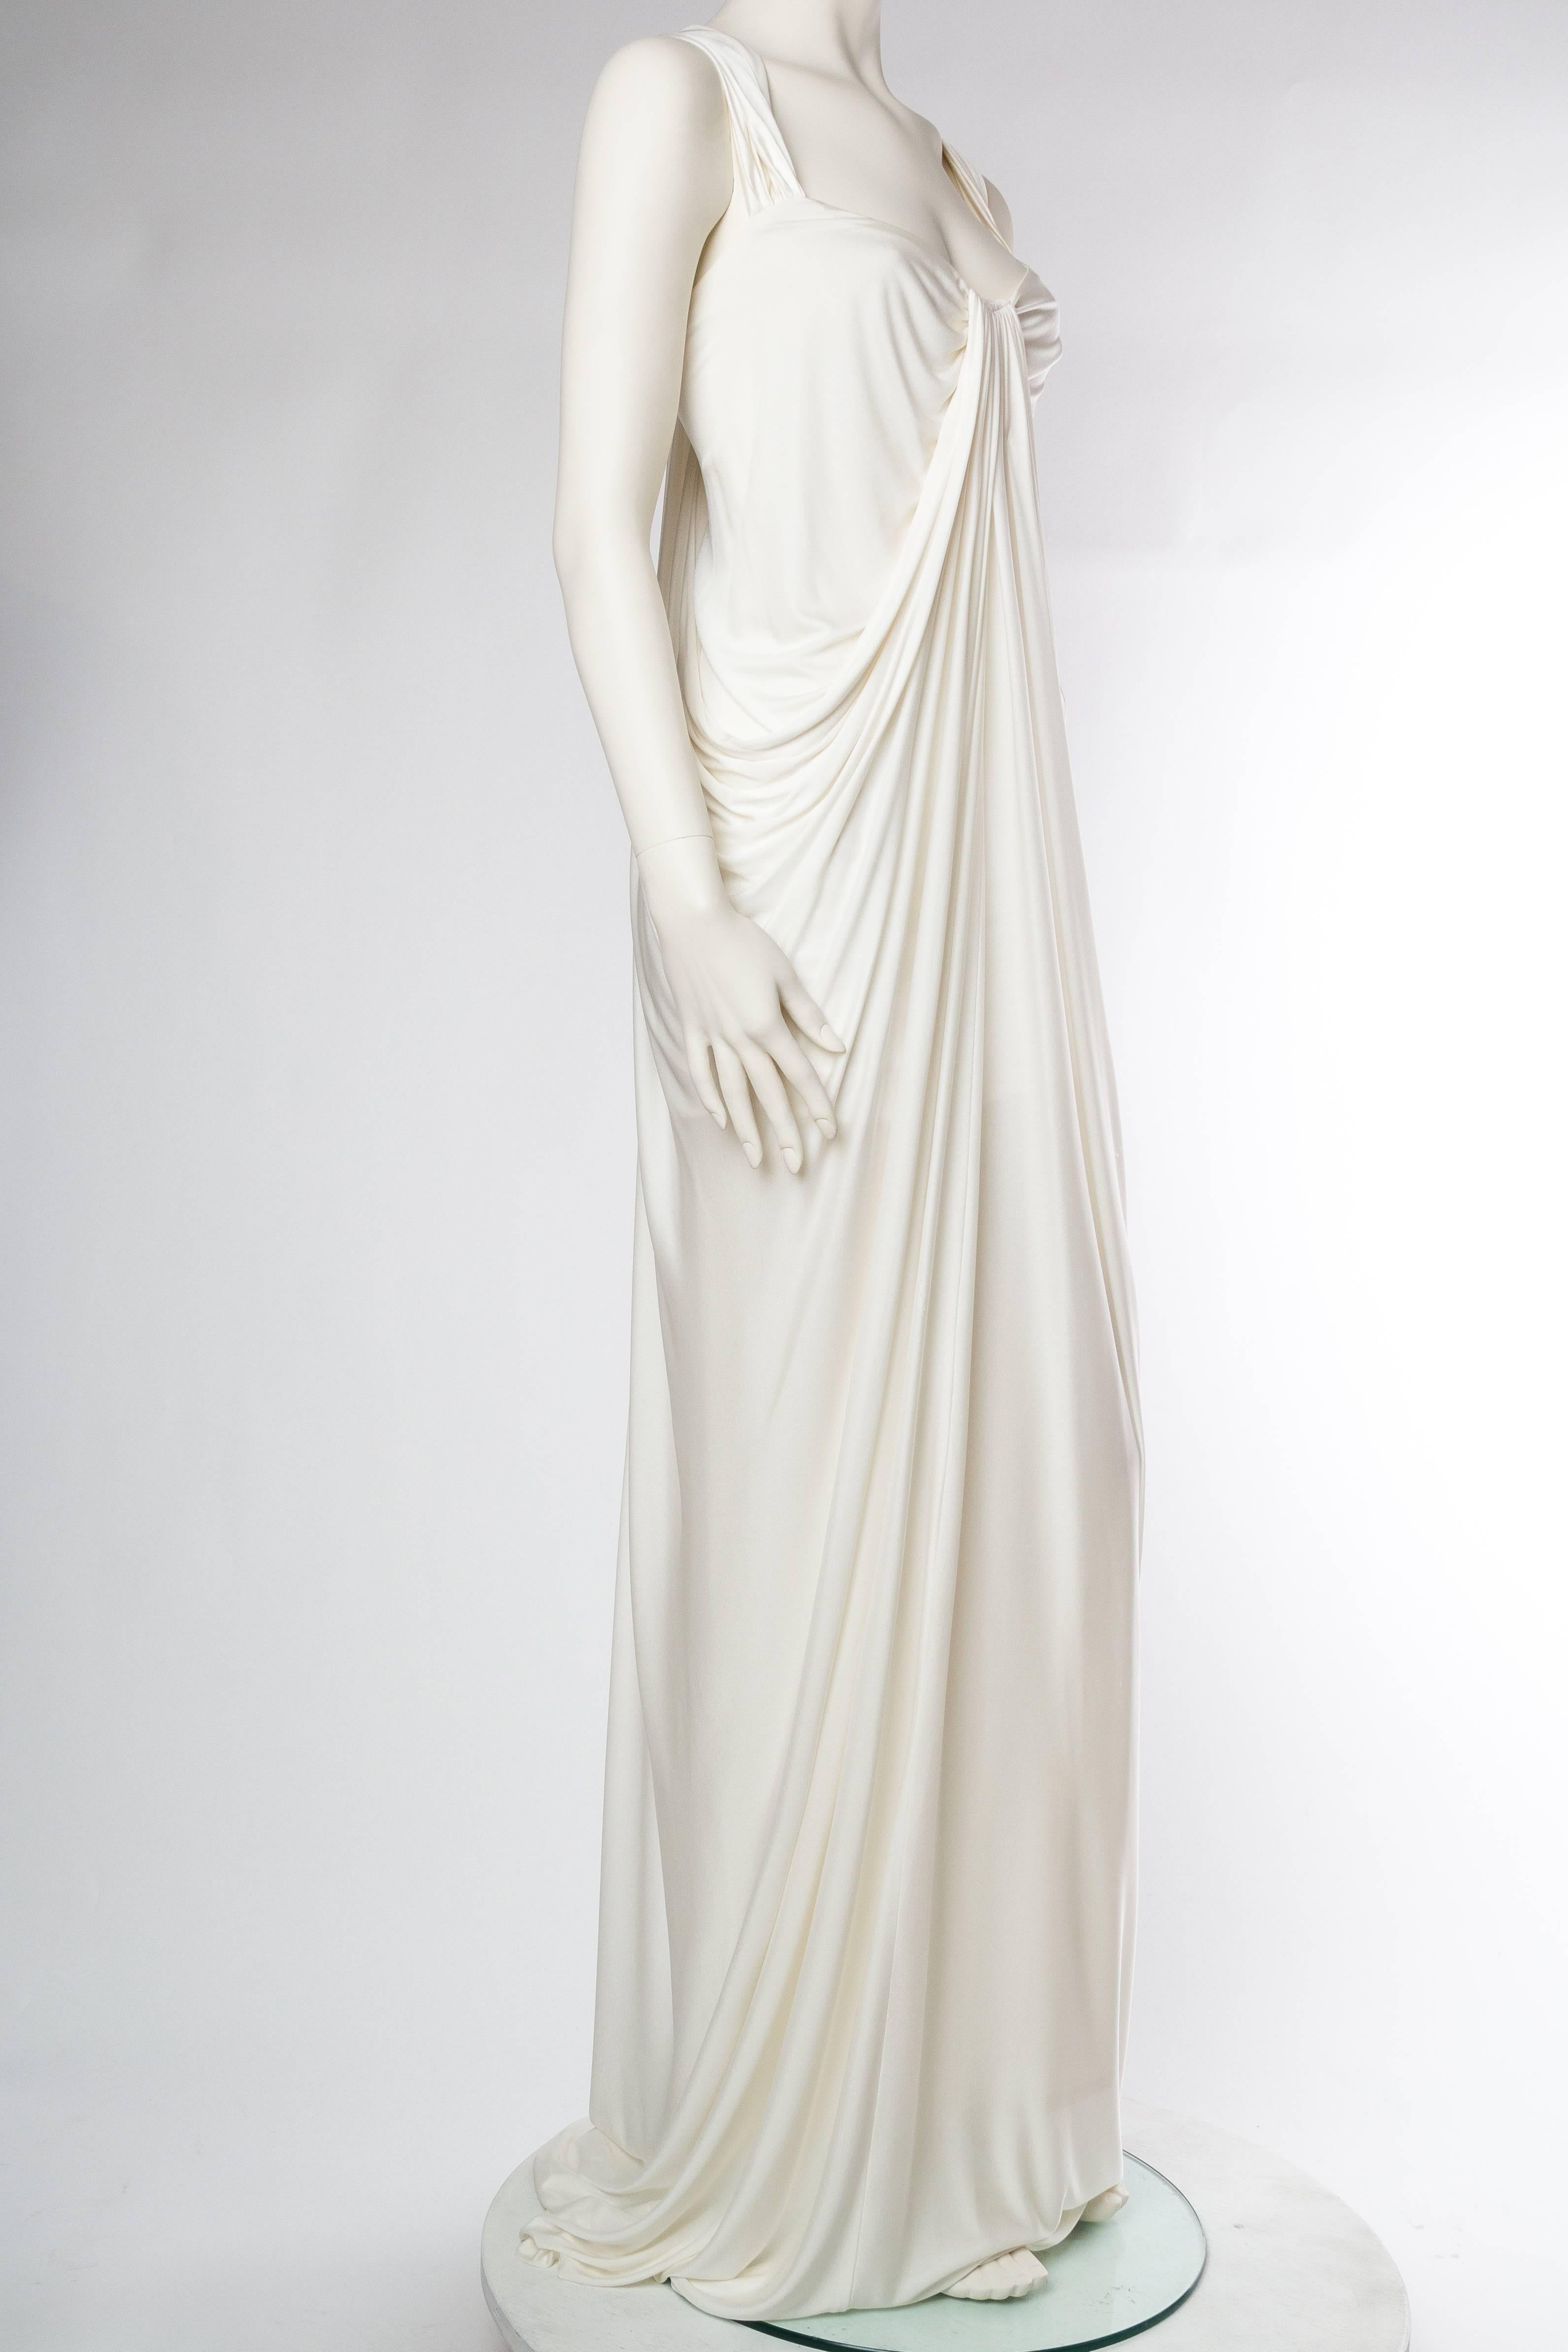 donna karan white dress